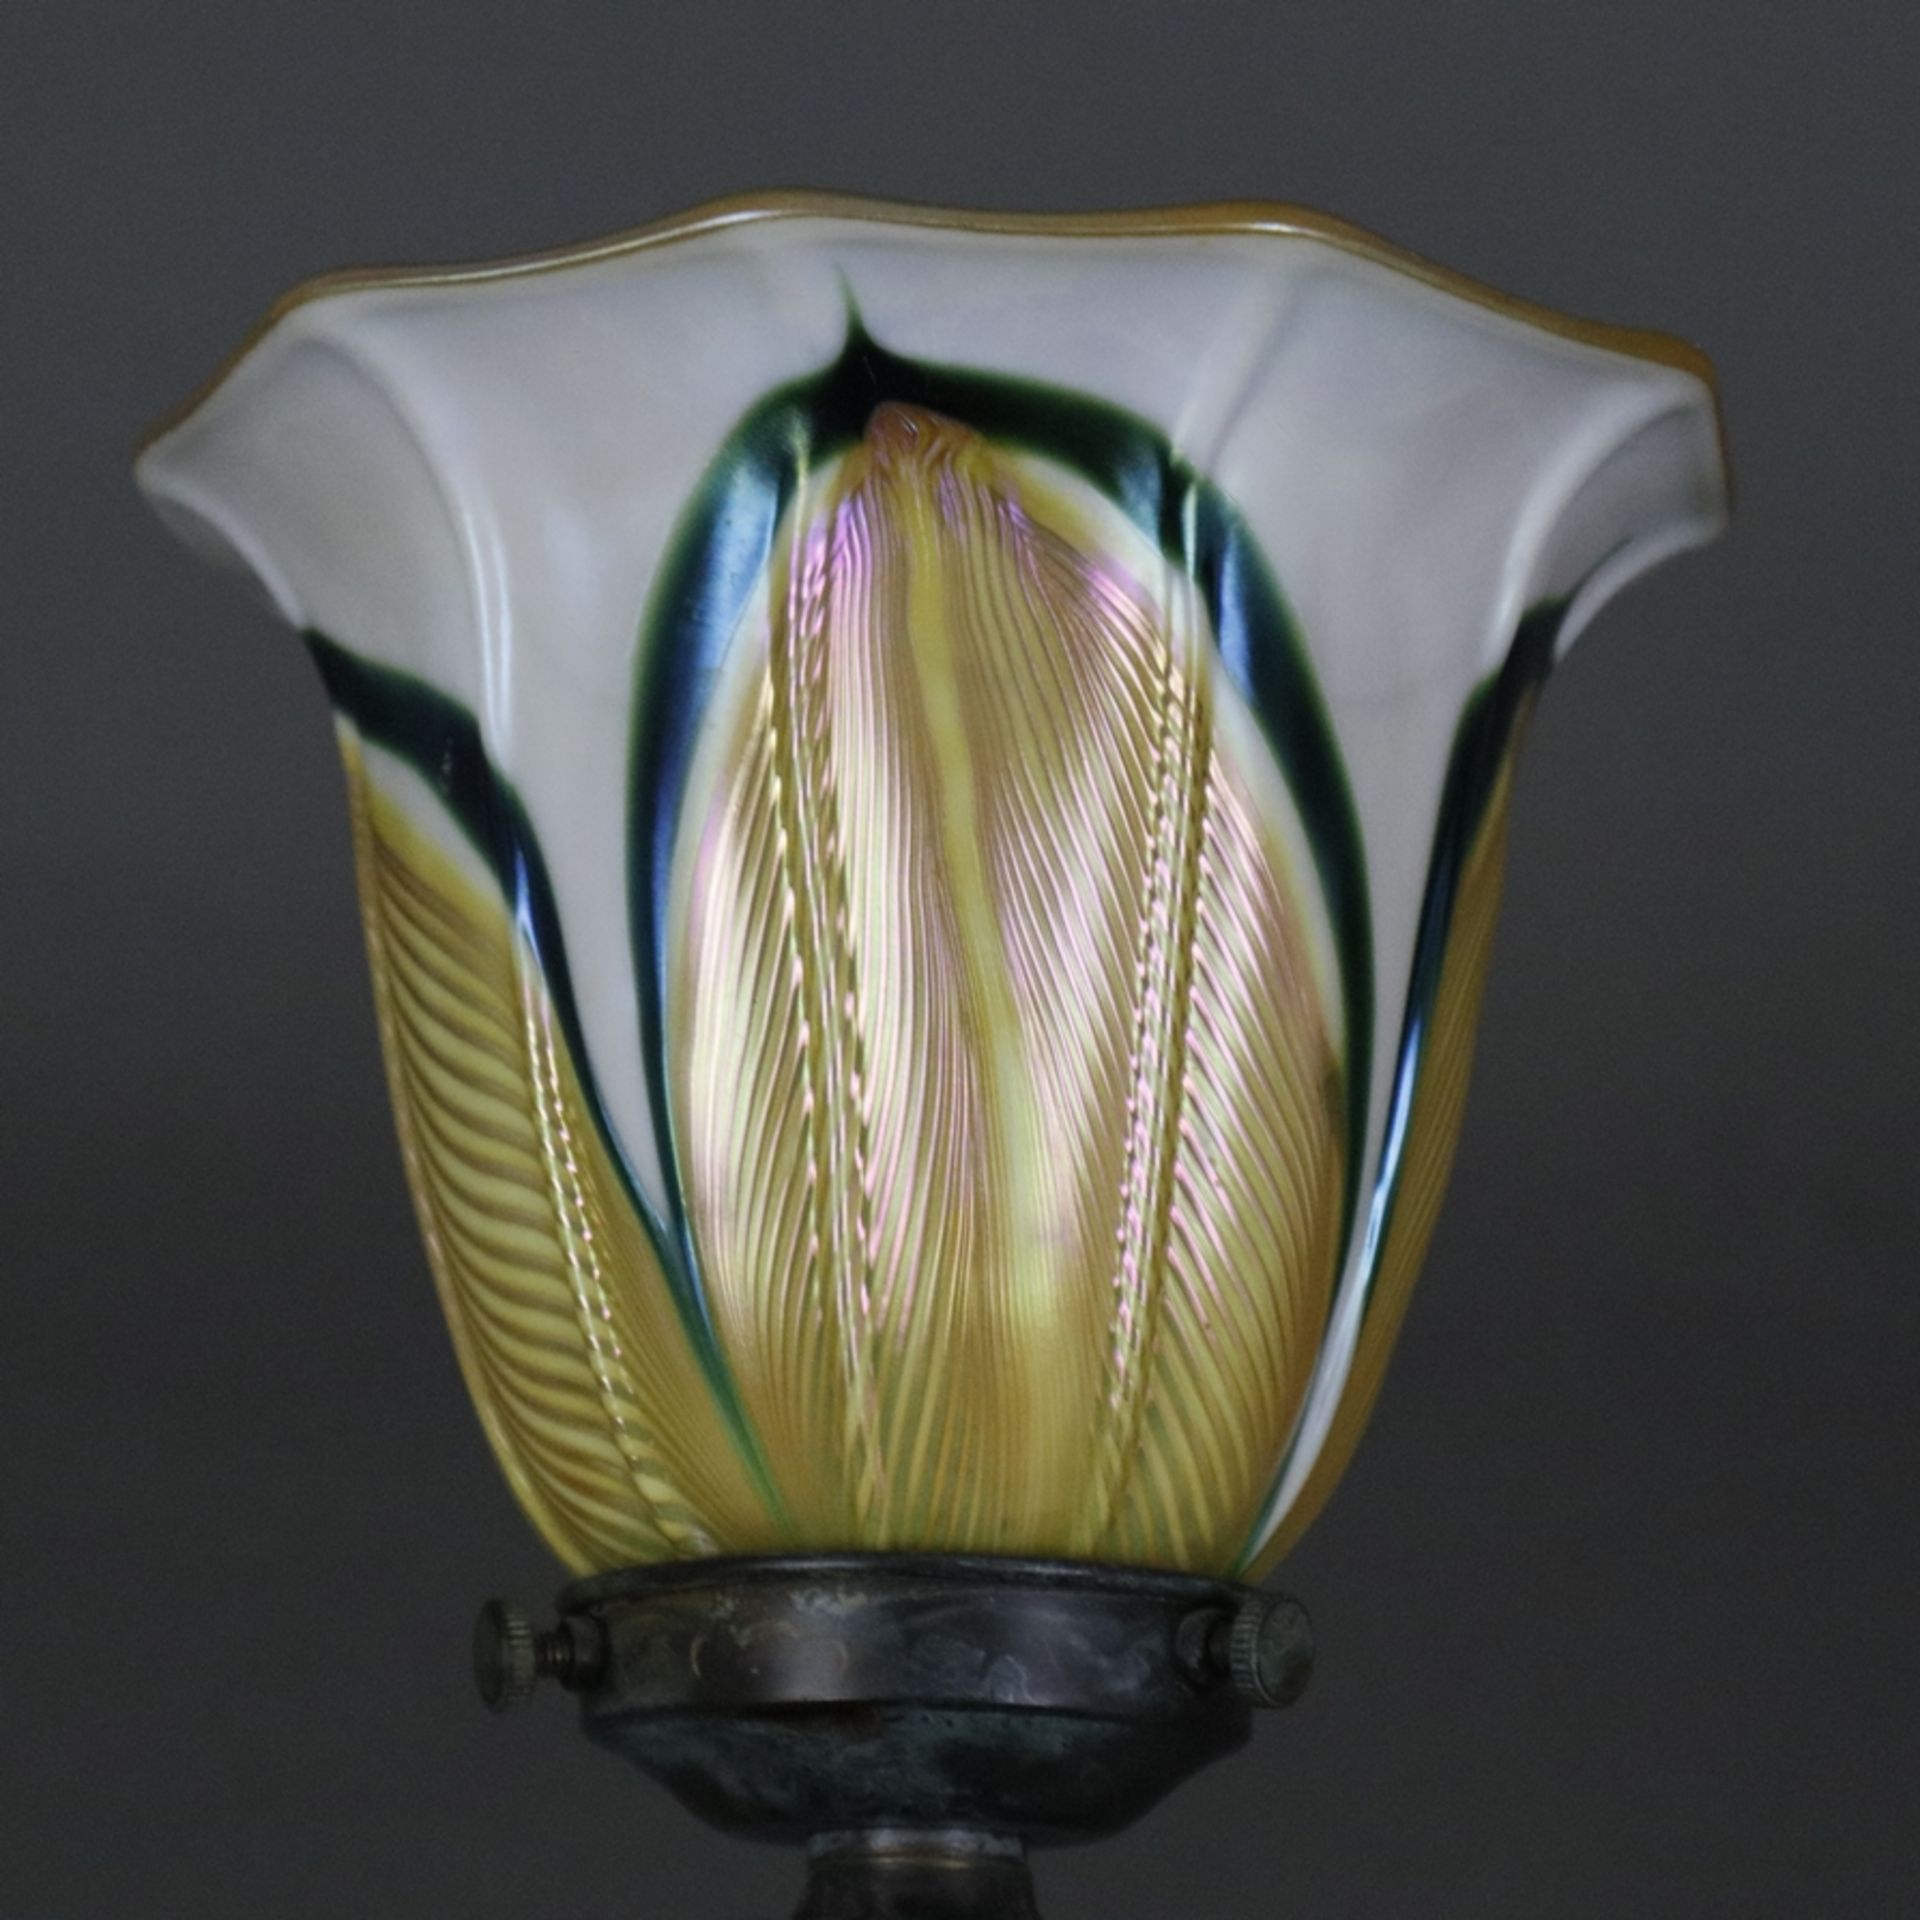 Jugendstil Tischlampe - um 1900/10, floral reliefierter Metallfuß, bronziert, glockenförmiger Glass - Image 6 of 7